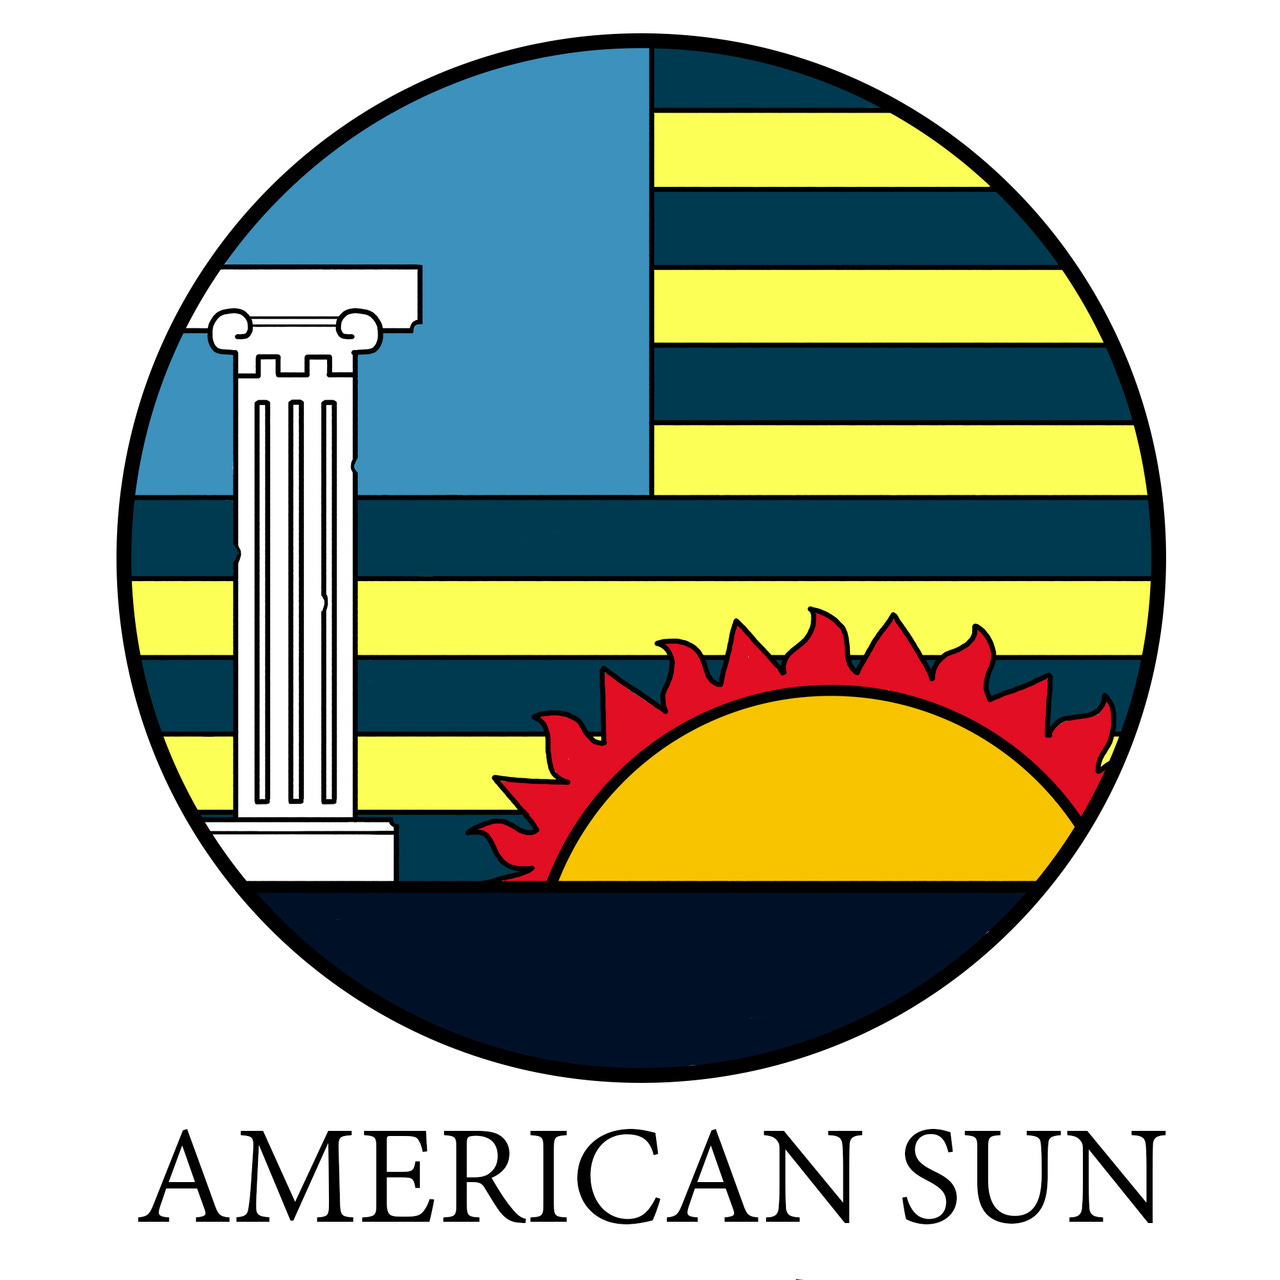 The American Sun